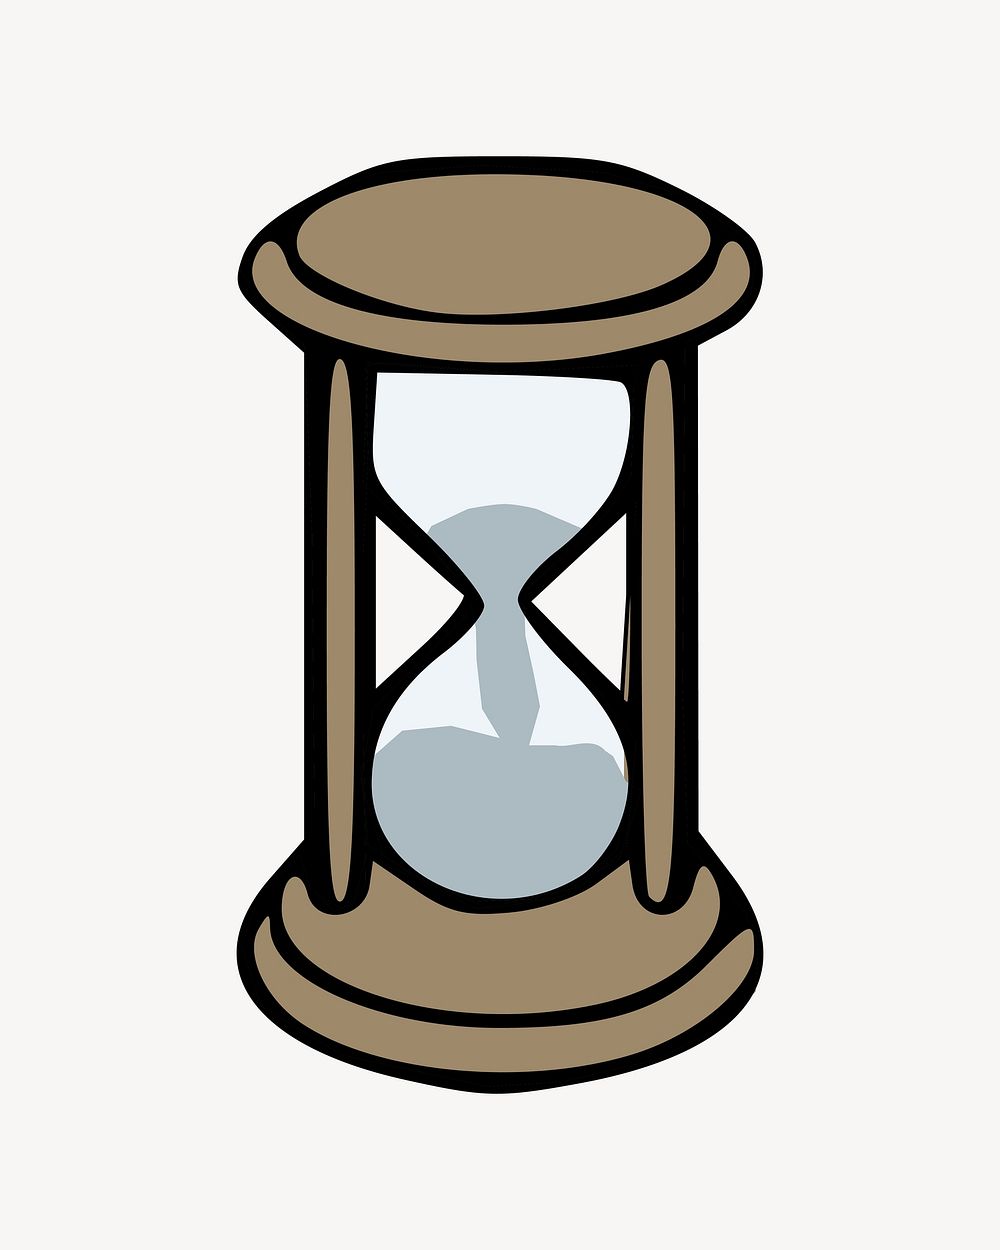 Hourglass clip art isolated design. Free public domain CC0 image.